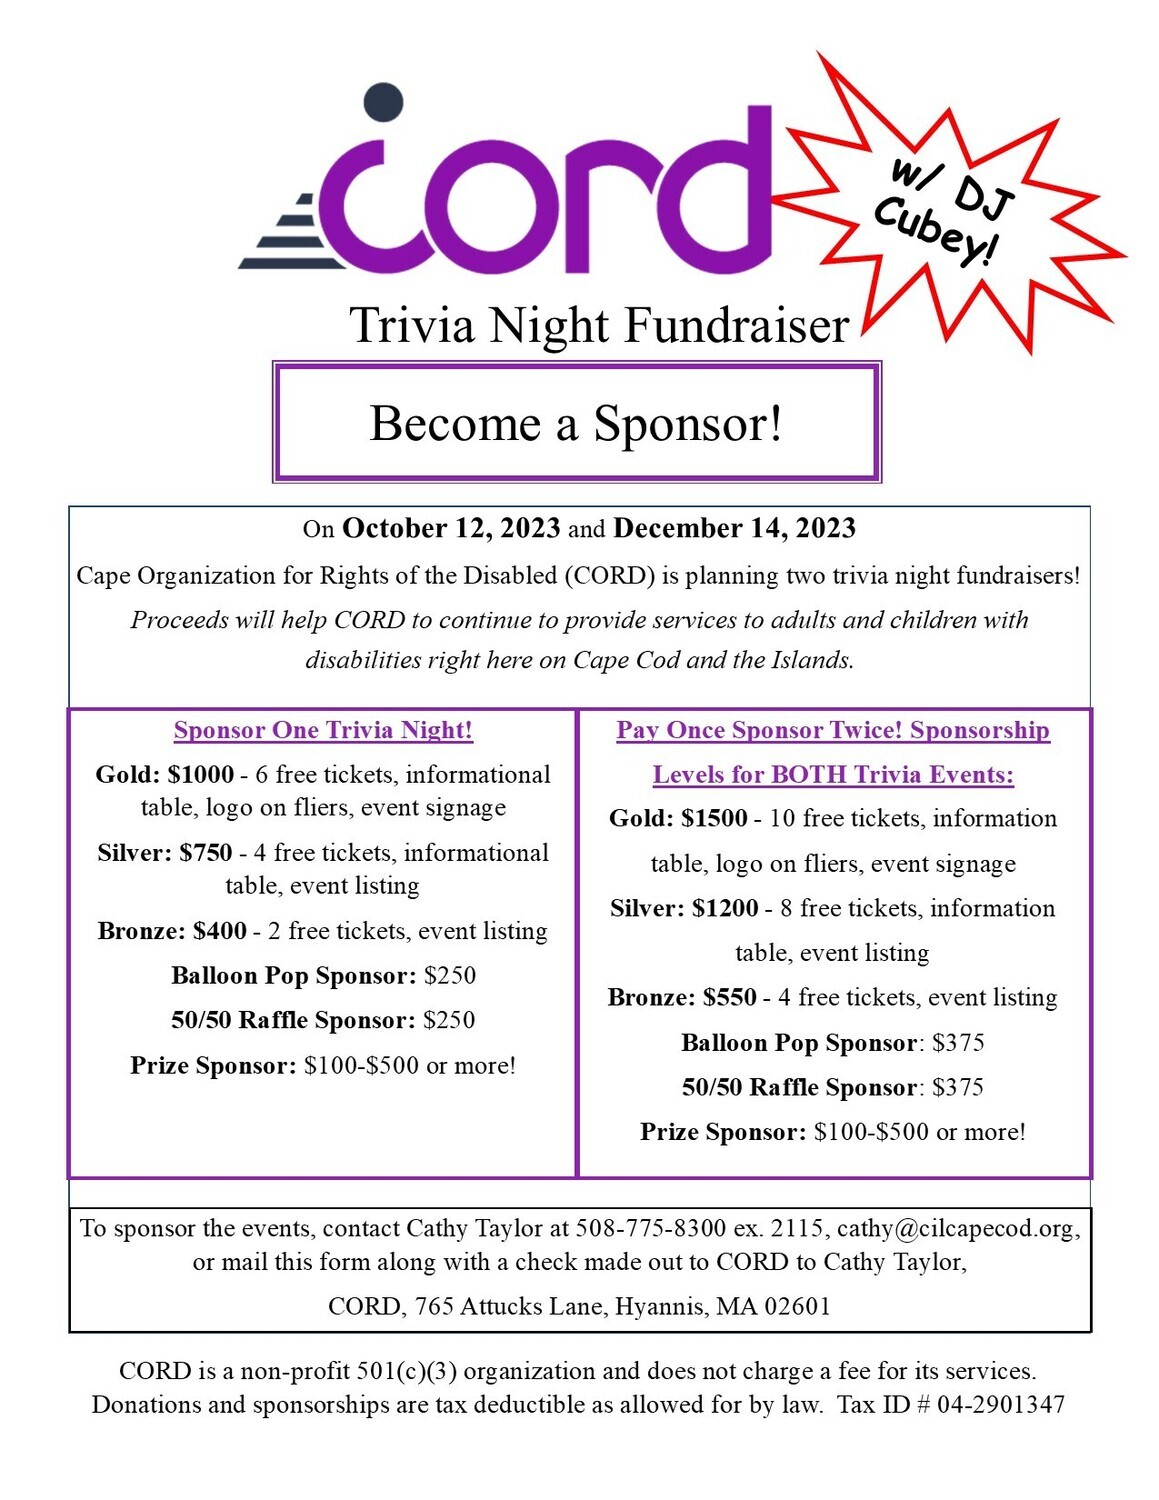 CORD Trivia Night 50/50 Raffle Sponsorship Dec 14 only